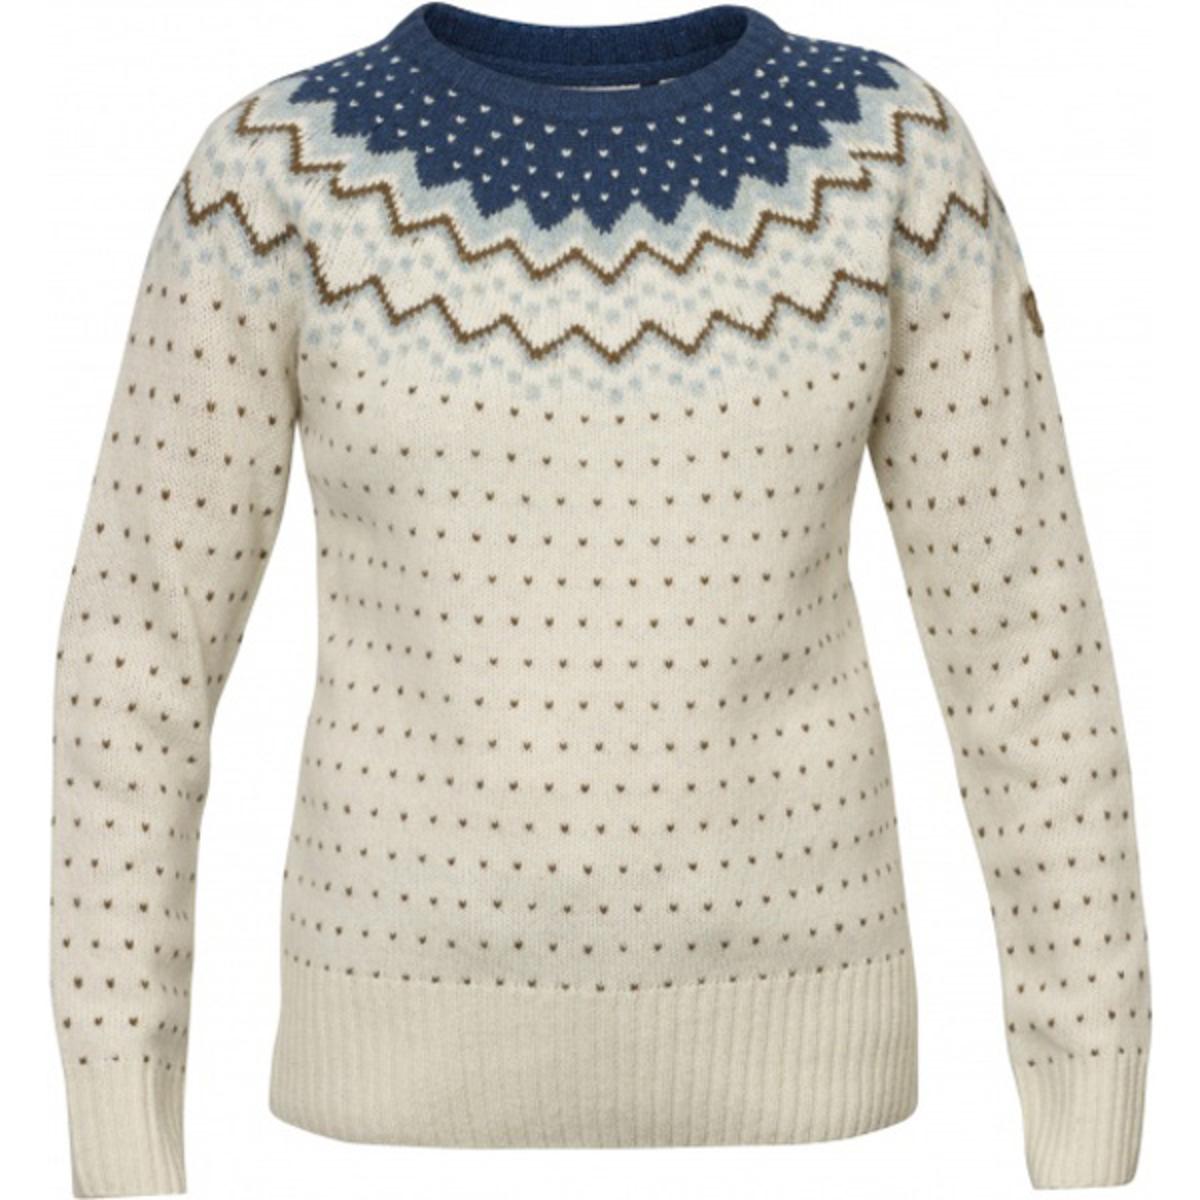 FjallRaven Women's Ovik Knit Sweater